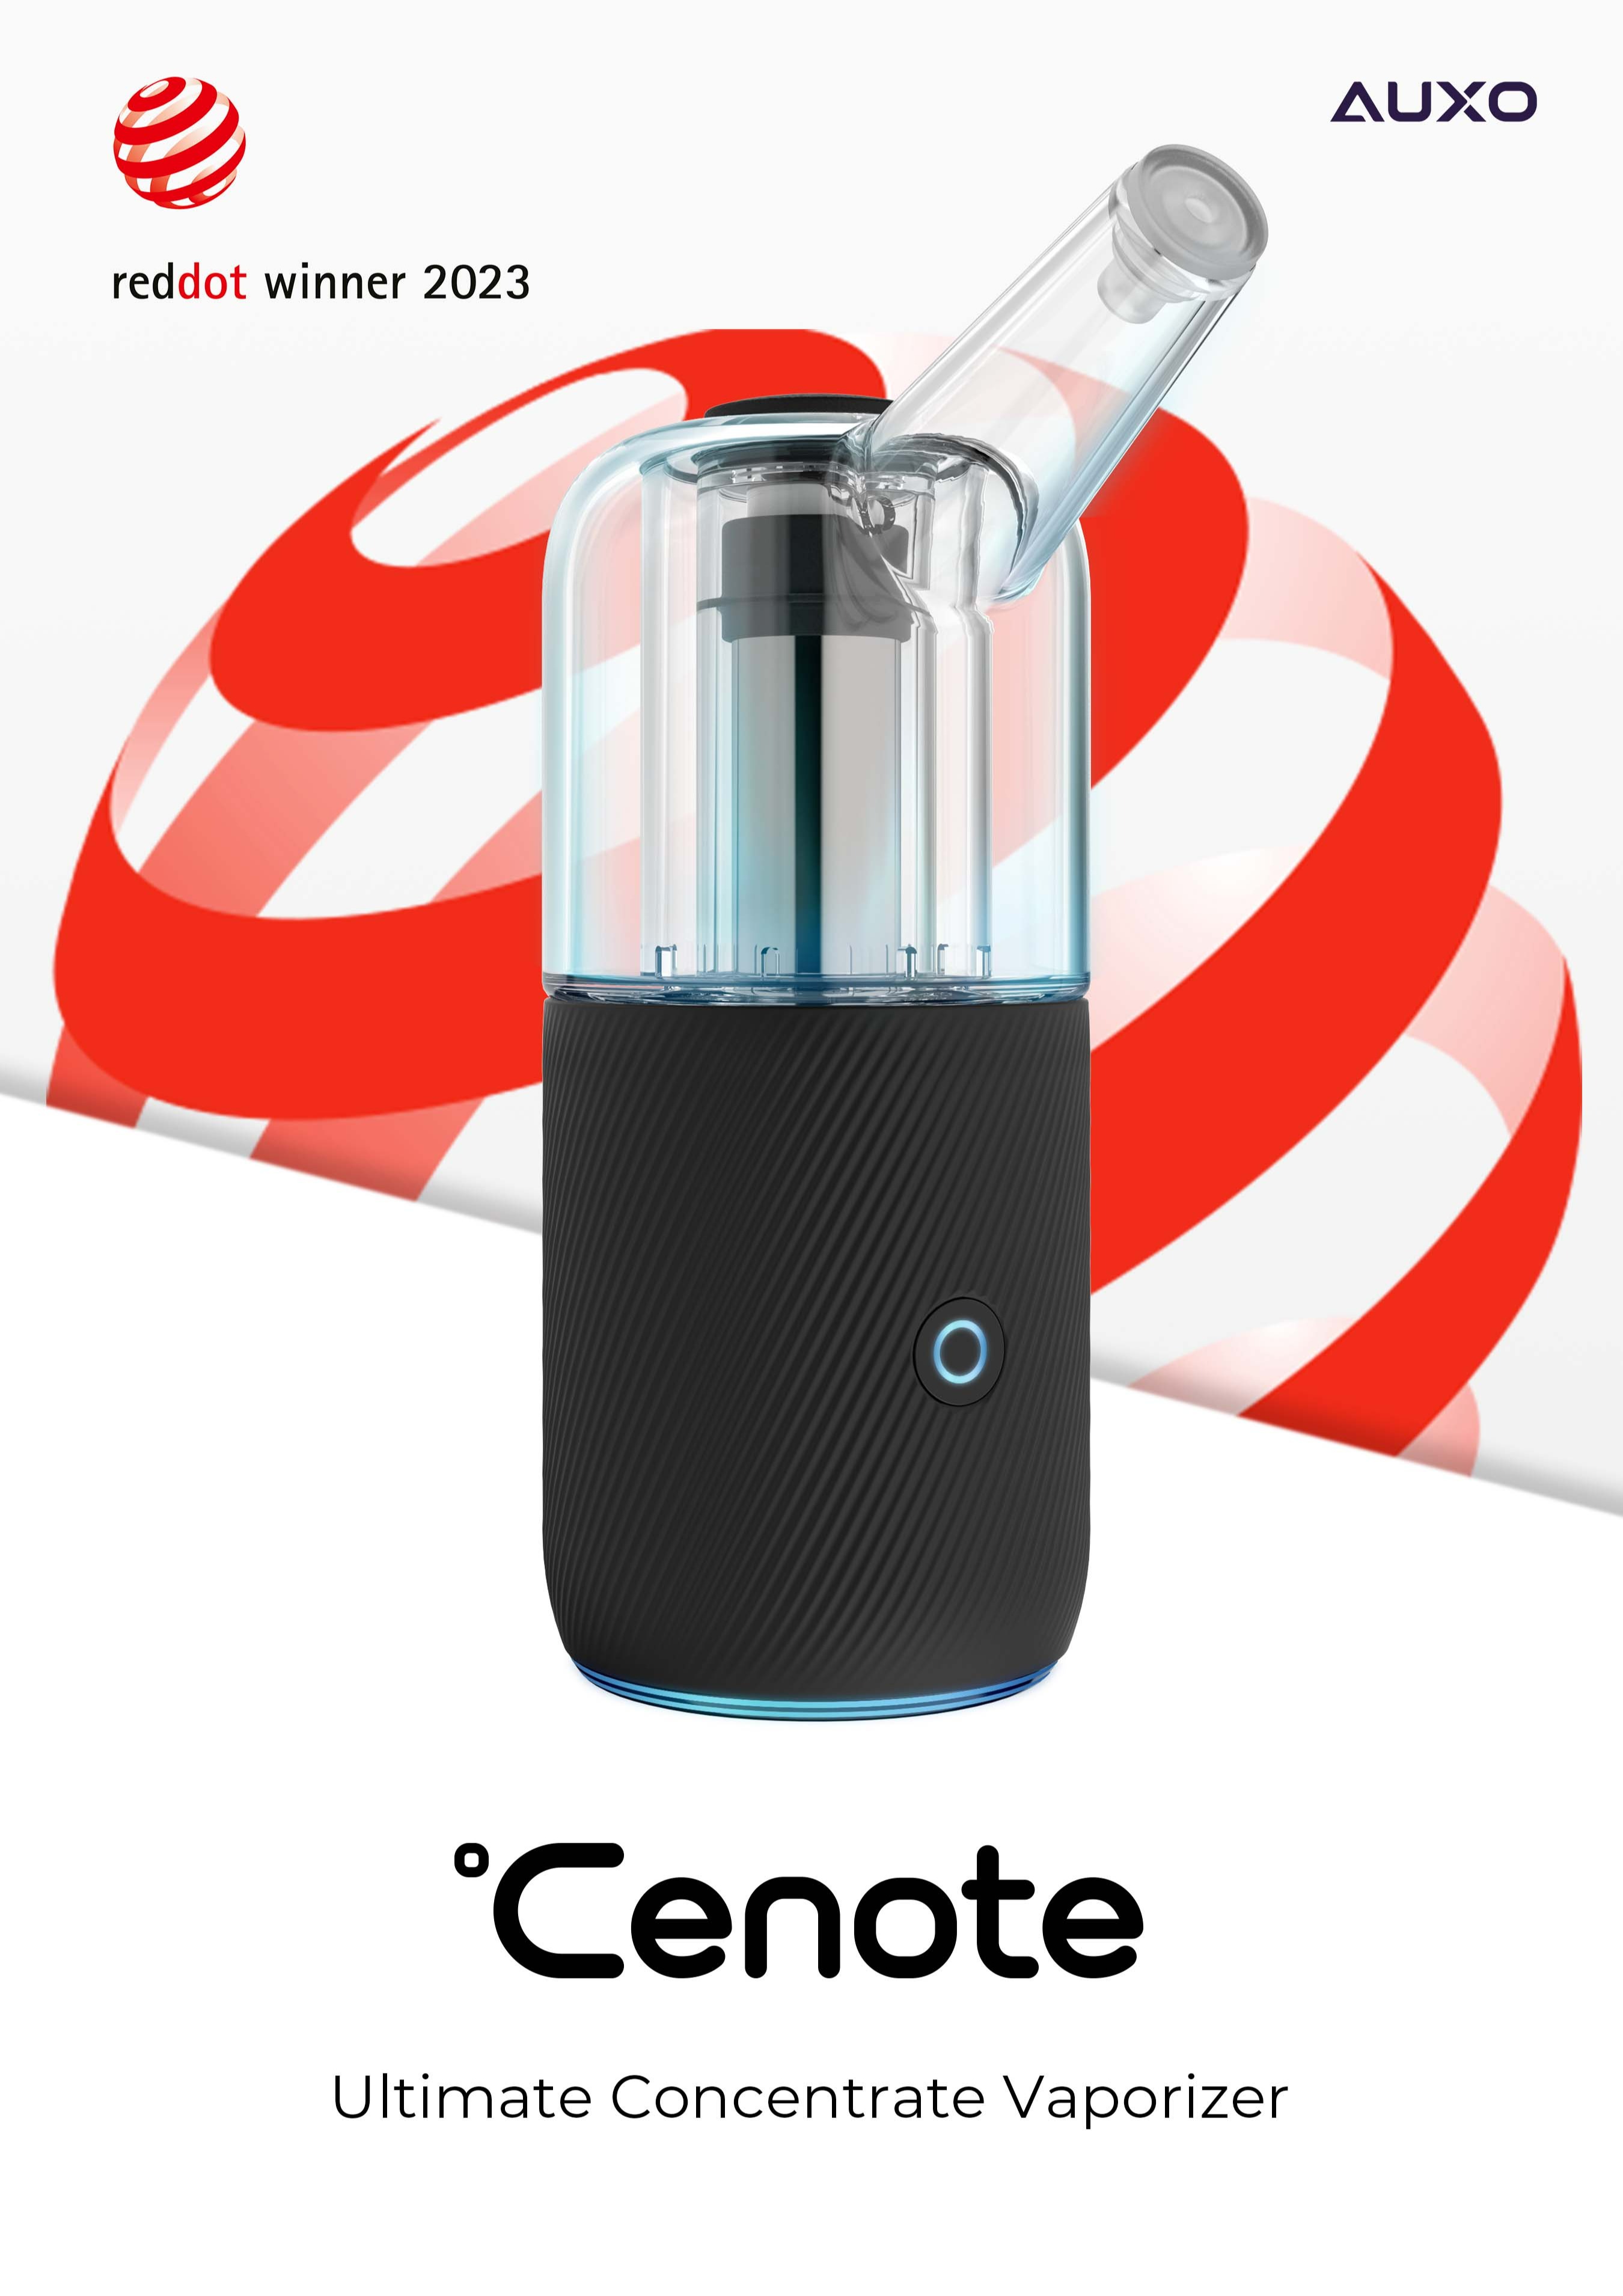 AUXO™ Cenote Receives Prestigious 2023 Red Dot Award for Product Design 156